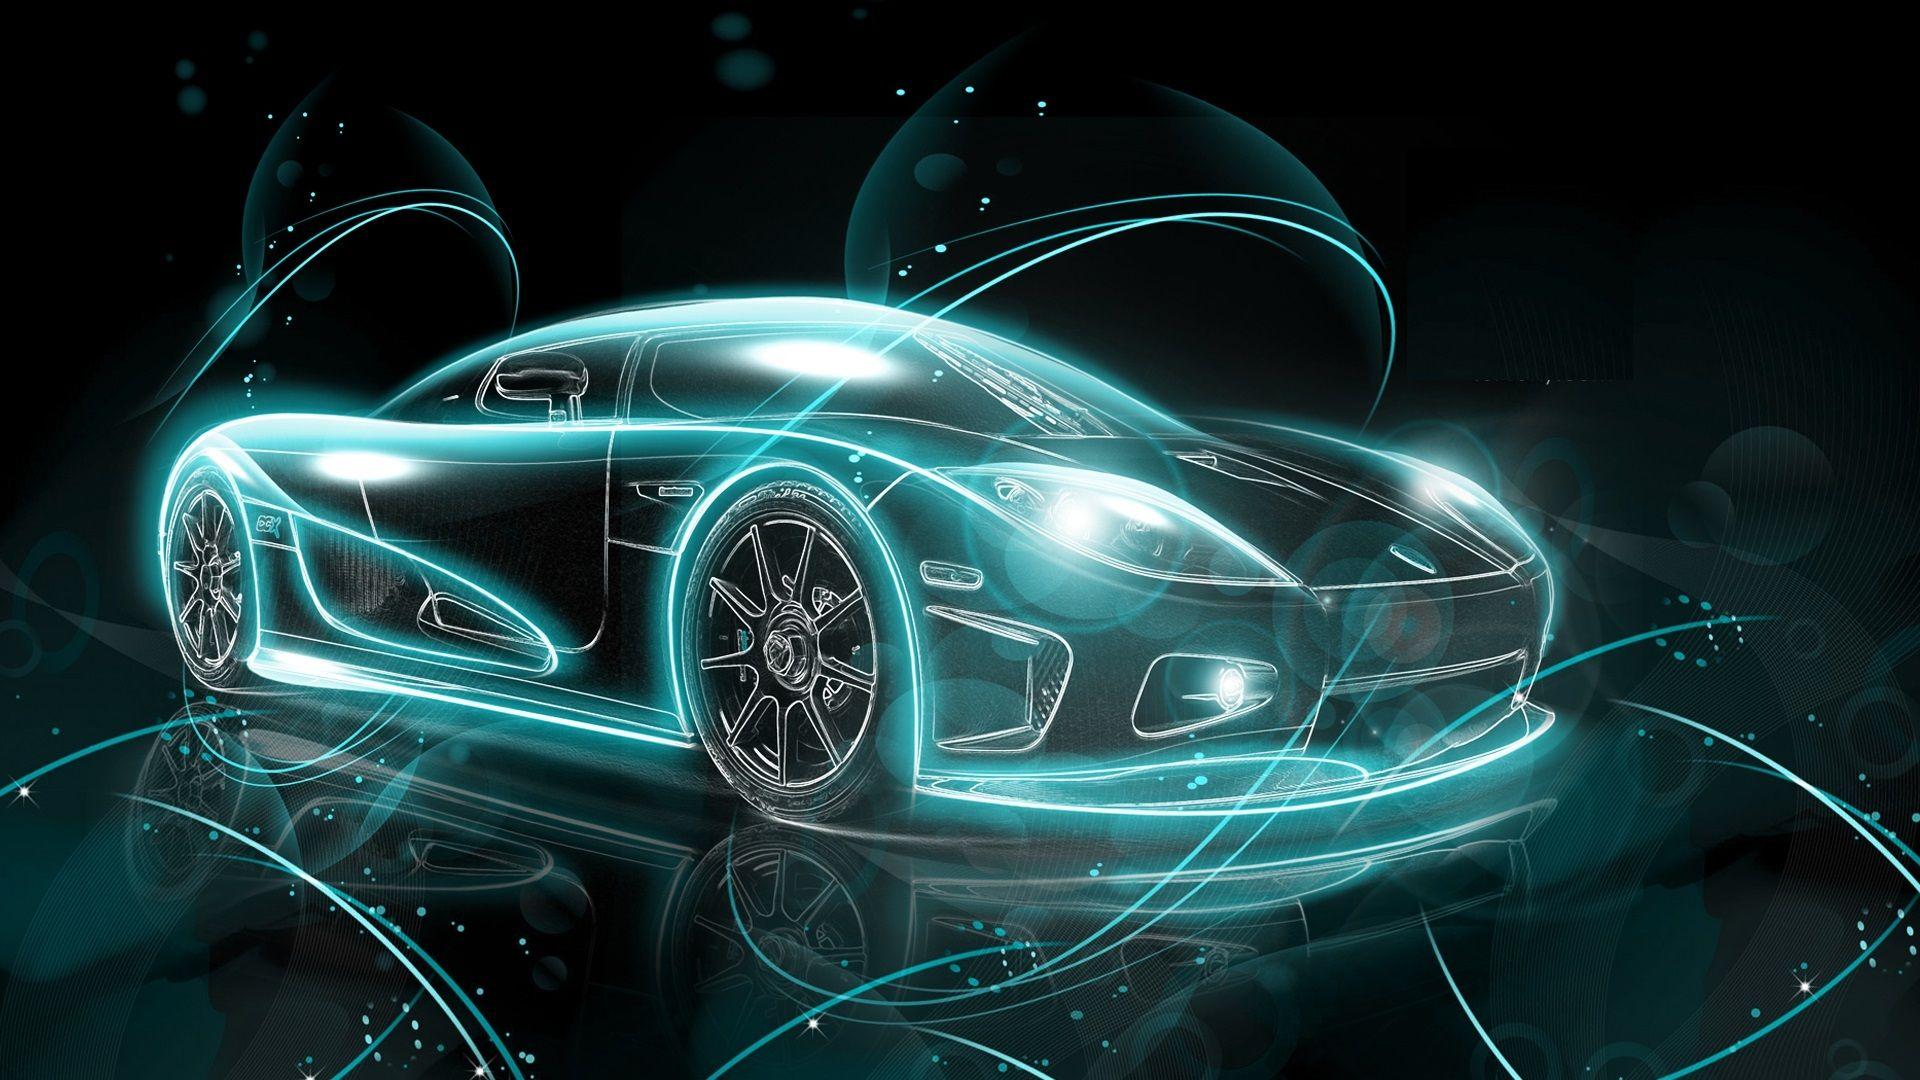 Abstract Sports Car HD Wallpaper. Car Wallpaper. Neon car, Cool car picture, Car hd